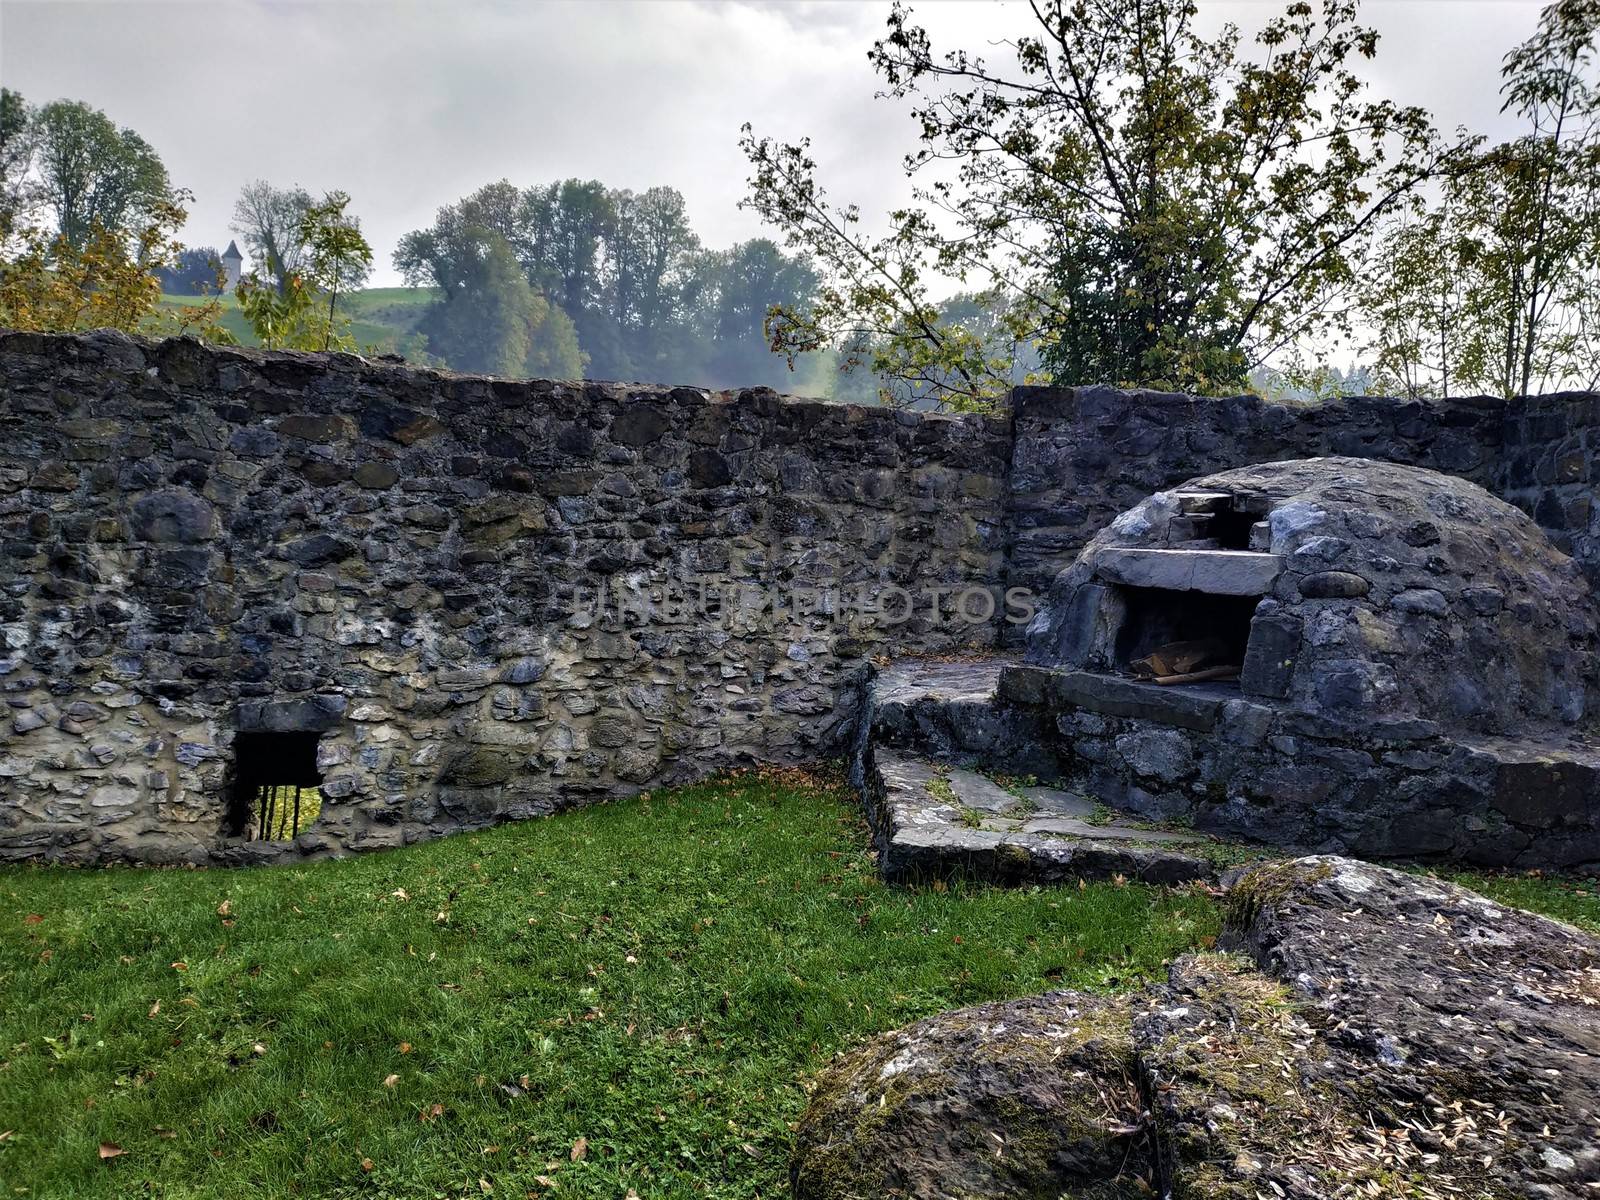 Old oven, window and part of the wall of lower castle in Schellenberg, Liechtenstein